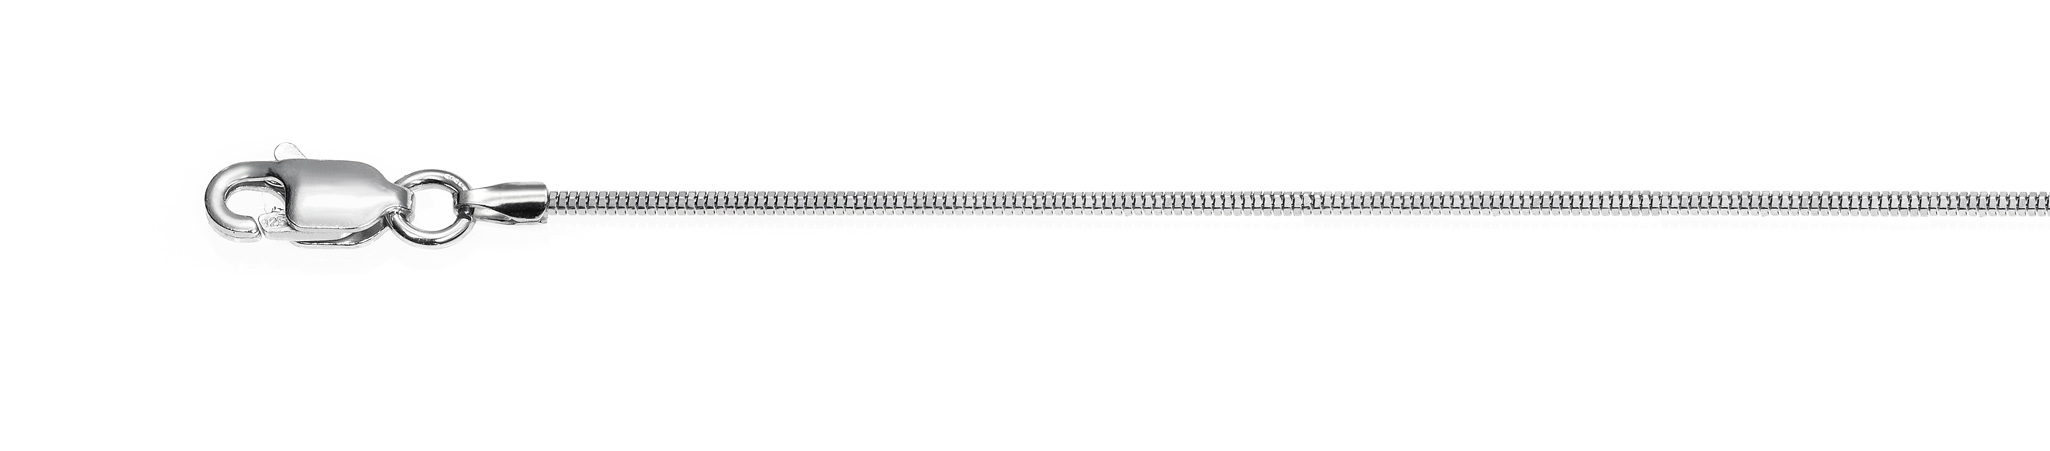 Ref.: 91010 - Diamond cut snake rhodium plated - Wide 1.0